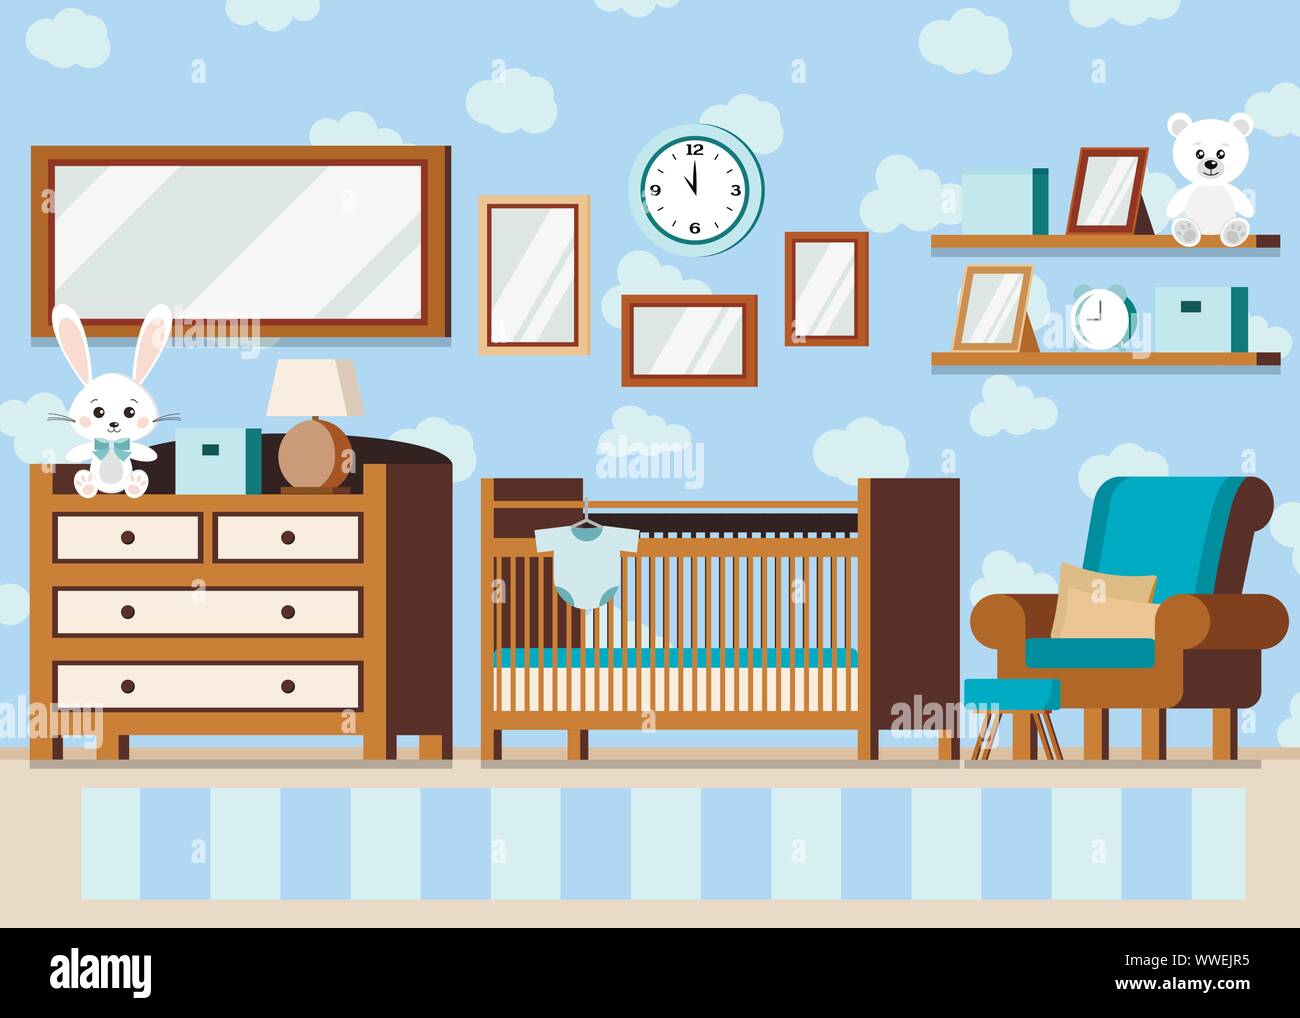 Cozy boy s baby room interior background in cartoon flat style Stock Vector  Image & Art - Alamy